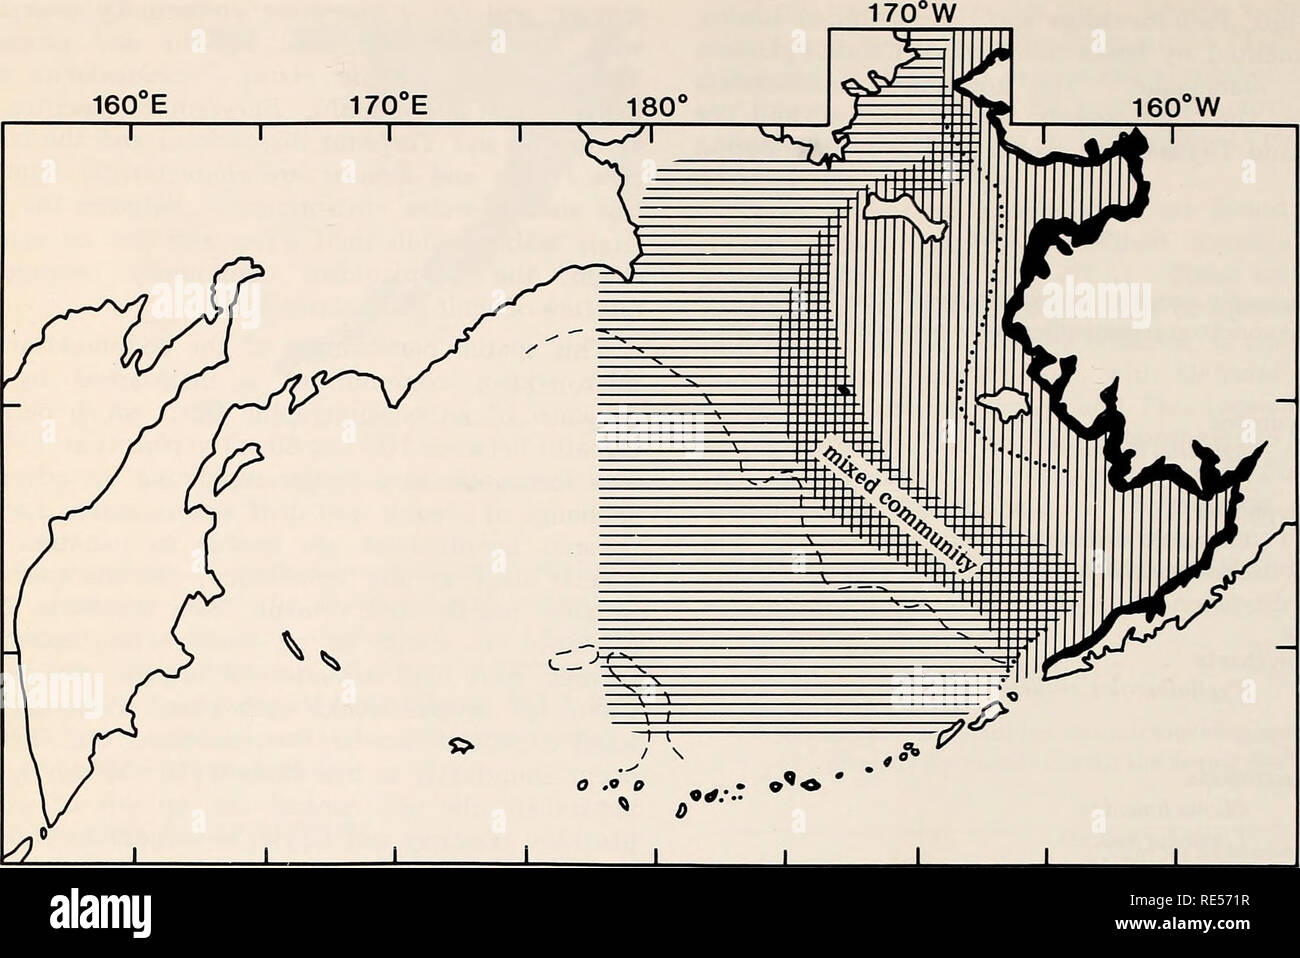 . The Eastern Bering Sea Shelf : oceanography and resources / edited by Donald W. Hood and John A. Calder. Oceanography Bering Sea.. 952 Plankton ecology. - 60° N - 50° N ZOOPLANKTON AND MICRONEKTON COMMUNITIES Oceanic and Outer-Shelf Community Calanus cristatus C. plumchrus Eucalanus bungii bungii Metridia pacifica Pseudocalanus spp. Oithona similis Parathemisto pacifica Thysanoessa longipes T. inermis Eukrohnia hamata Sagitta elegans Middle-Shelf and Coastal Community Pseudocalanus spp. Acartia longiremis Oithona similis Calanus glacialis C. marshallae Parathemisto libellula Thysanoessa rasc Stock Photo